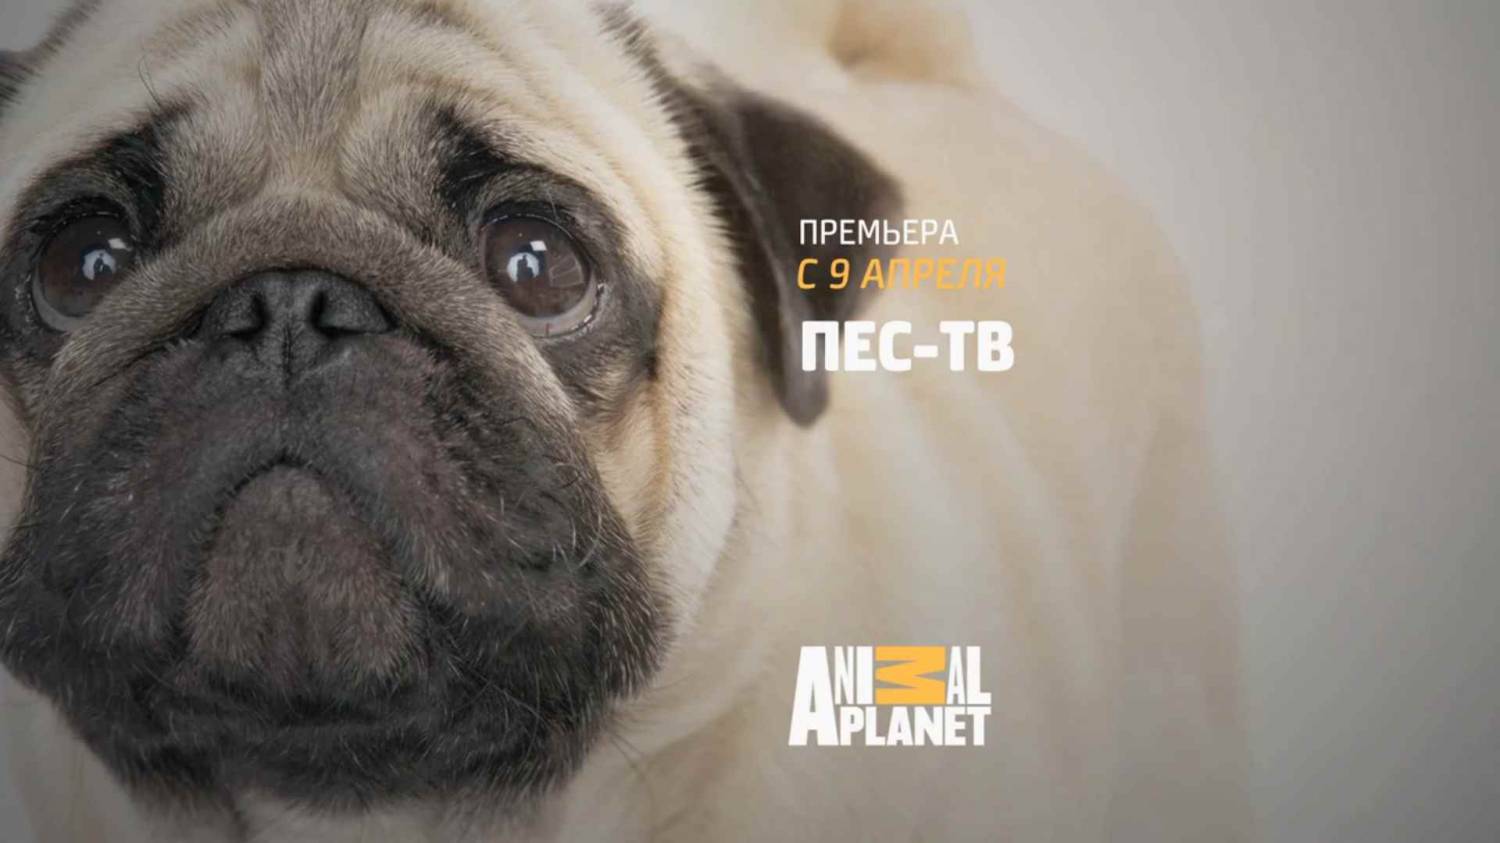 Музыка из рекламы ANIMAL PLANET - Пёс-ТВ